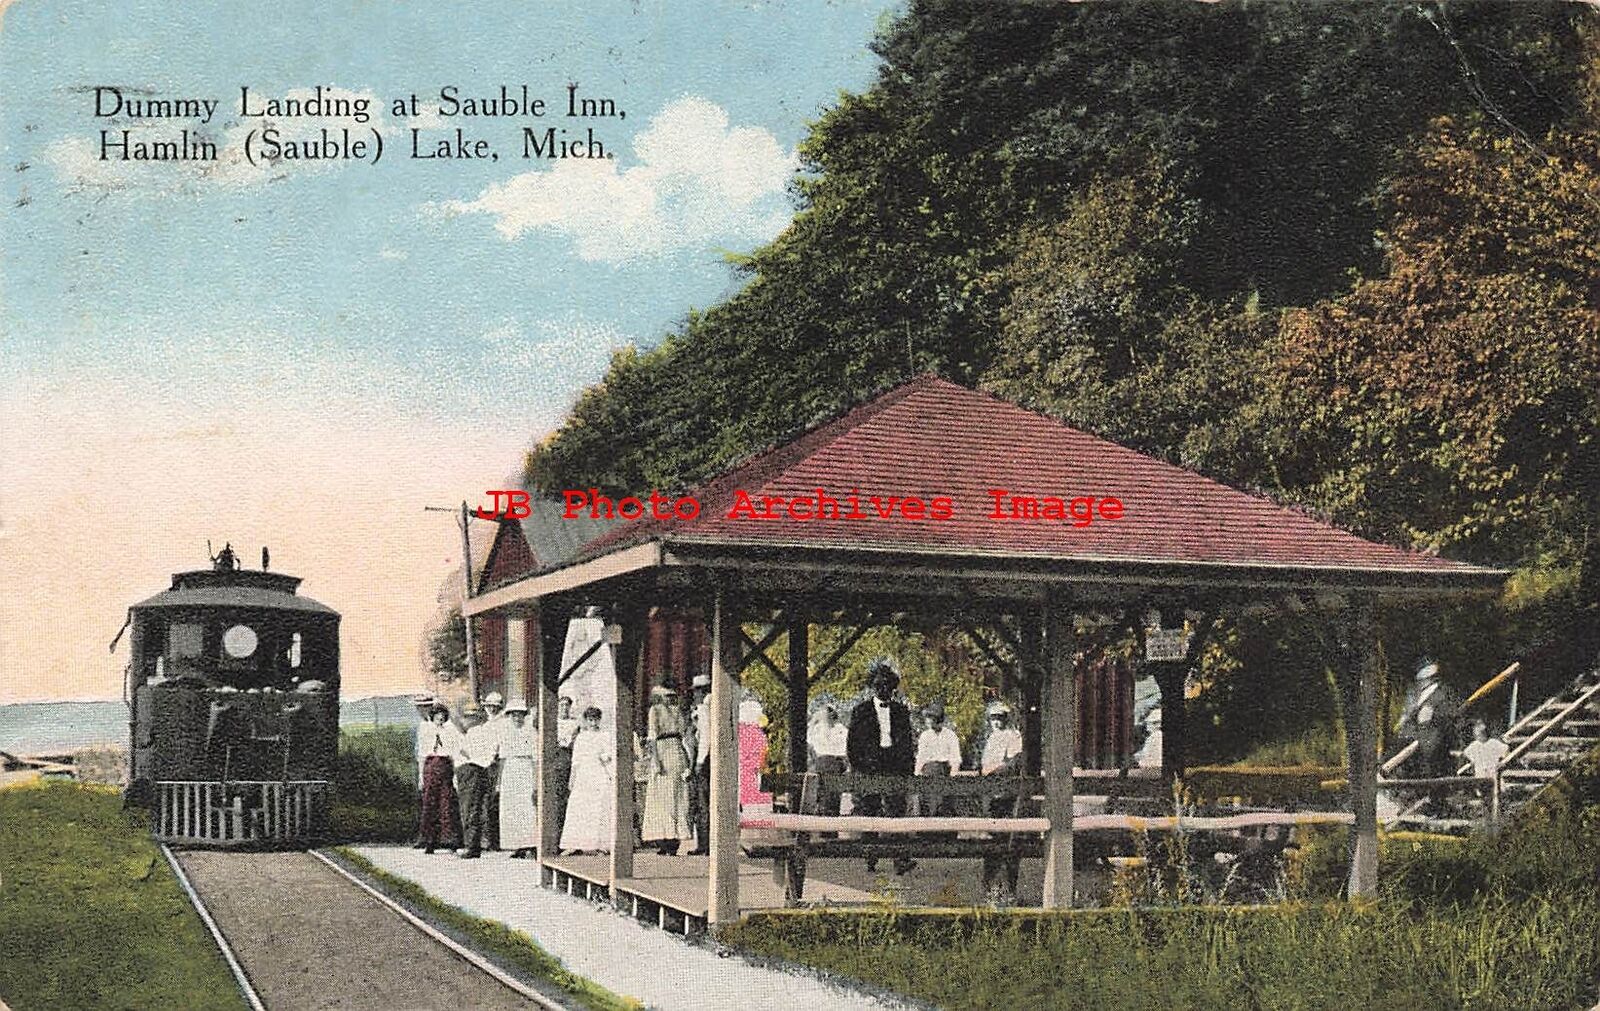 MI, Hamlin Lake, Michigan, Interurban Railroad Station at Sauble Inn